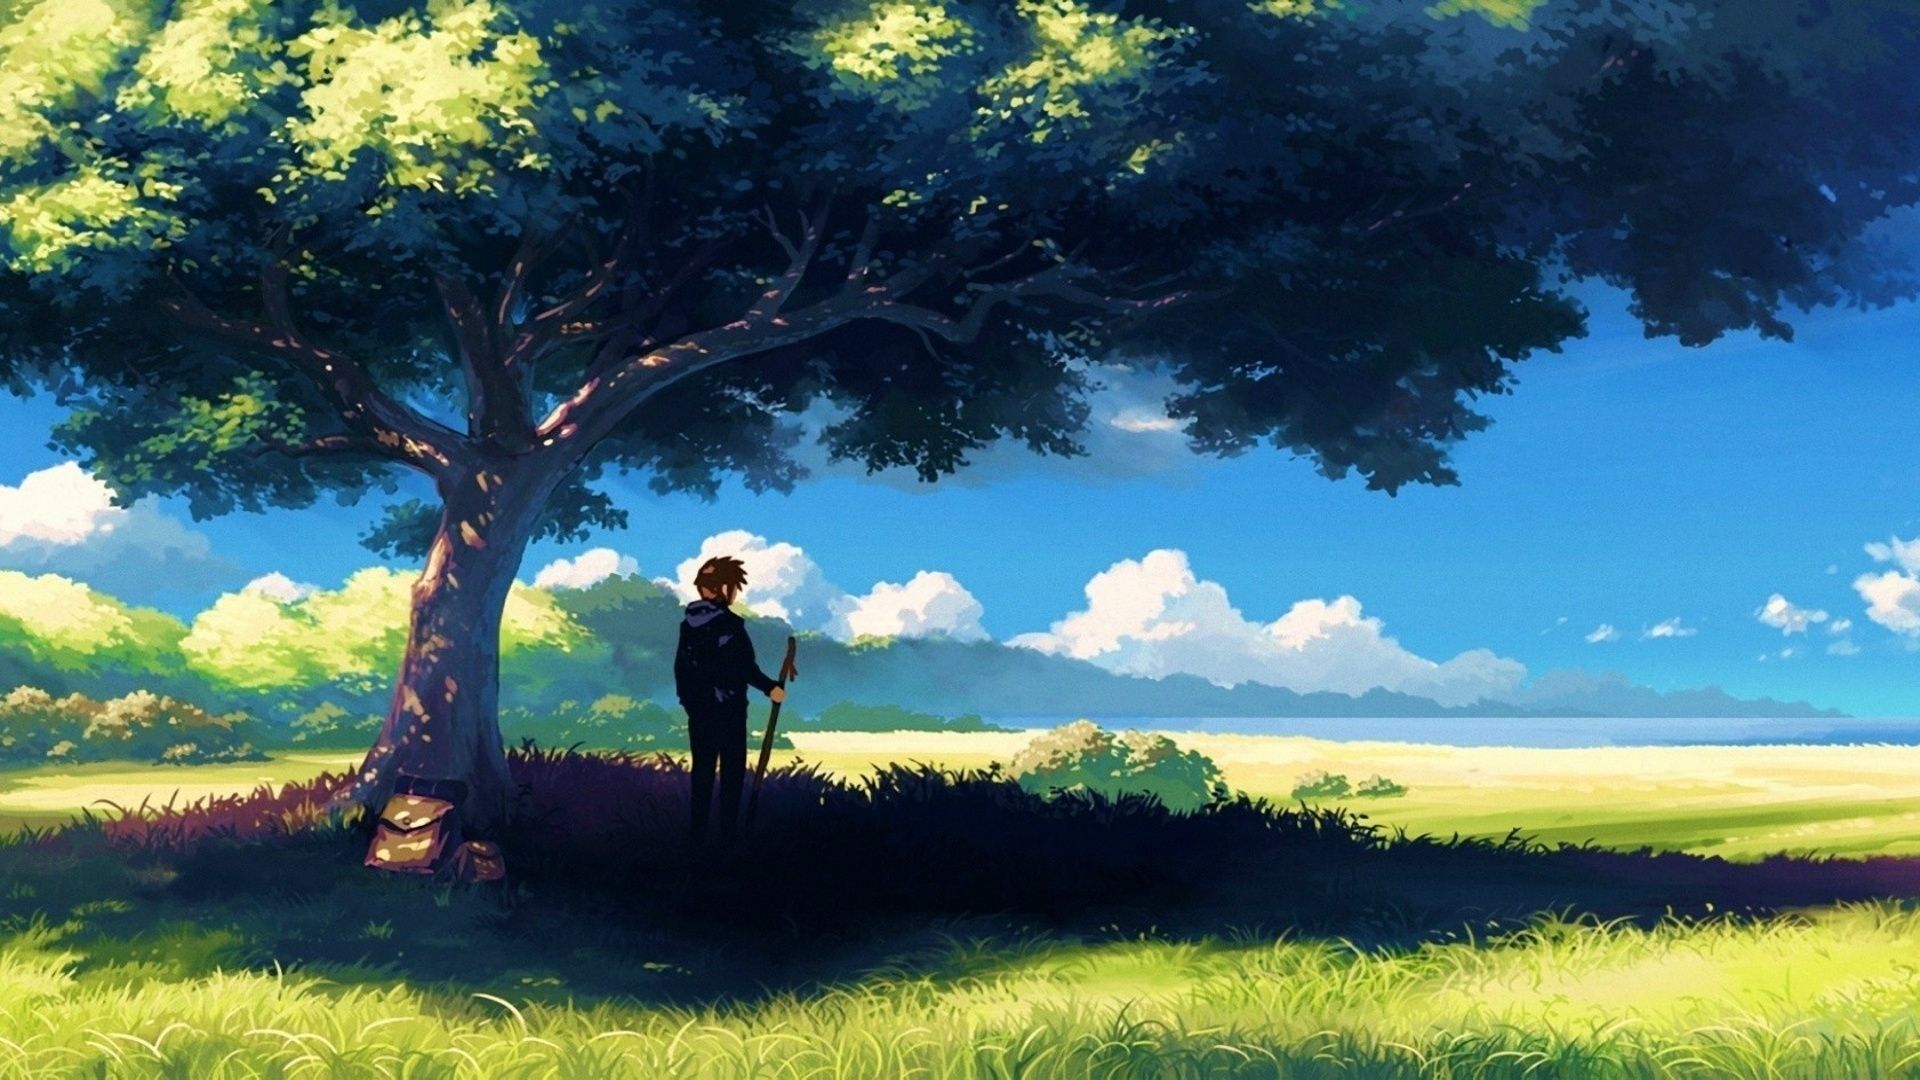 Wallpaper Anime Chill Anime Anime Art Anime Lofi Cartoon Background   Download Free Image